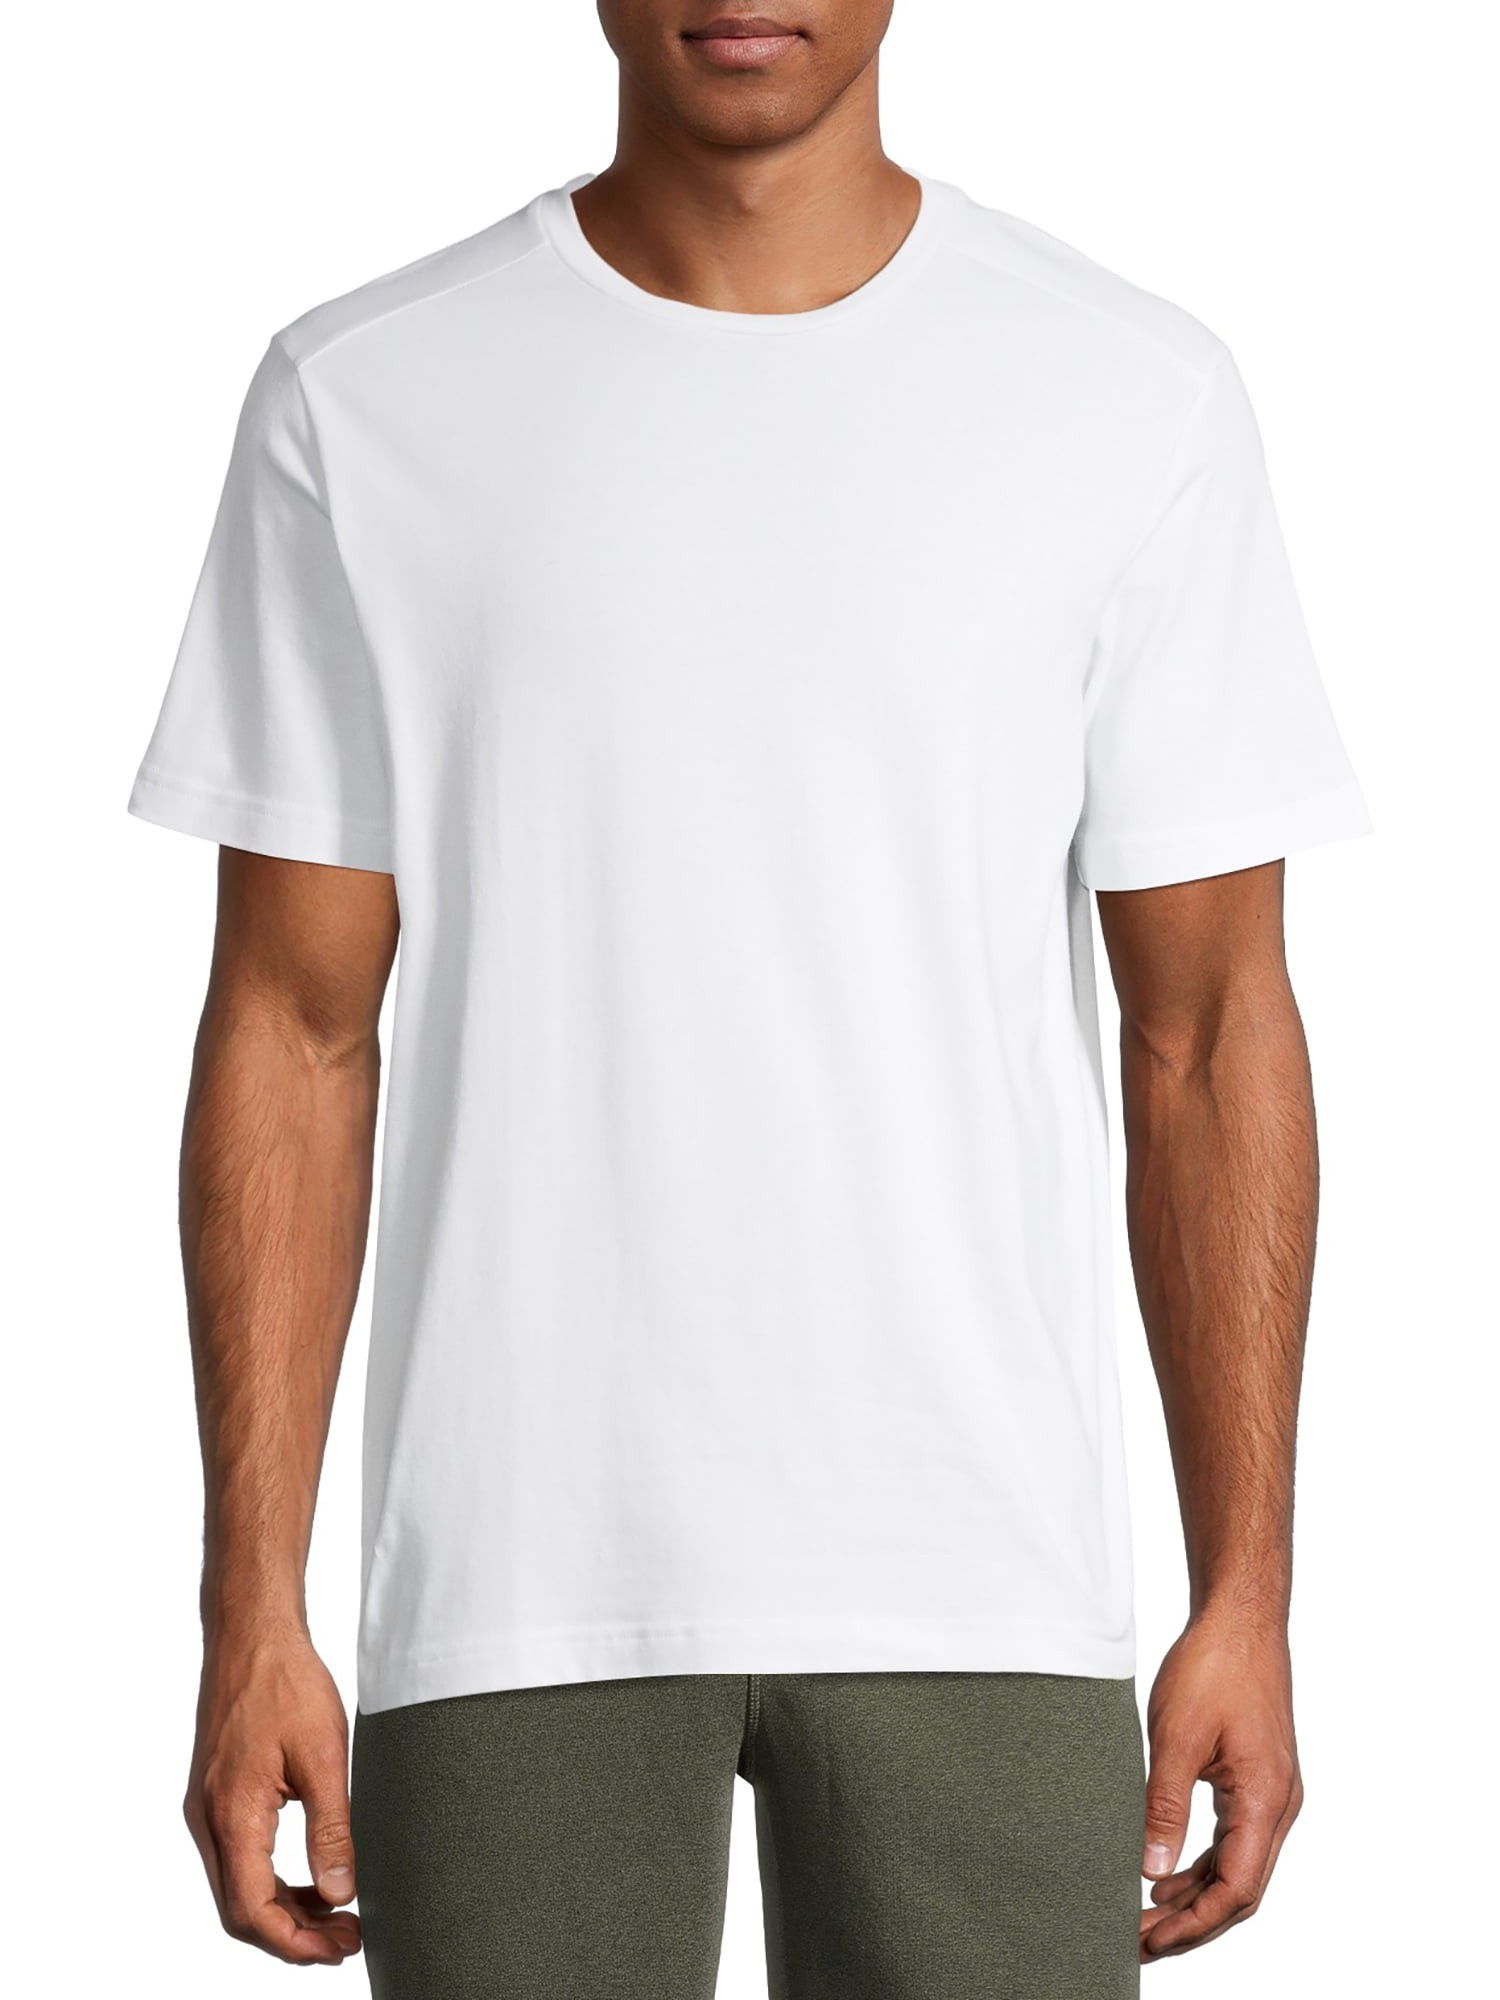 Athletic Works Men's Short Sleeve Soft Pocket T-Shirt, Sizes S-4XL